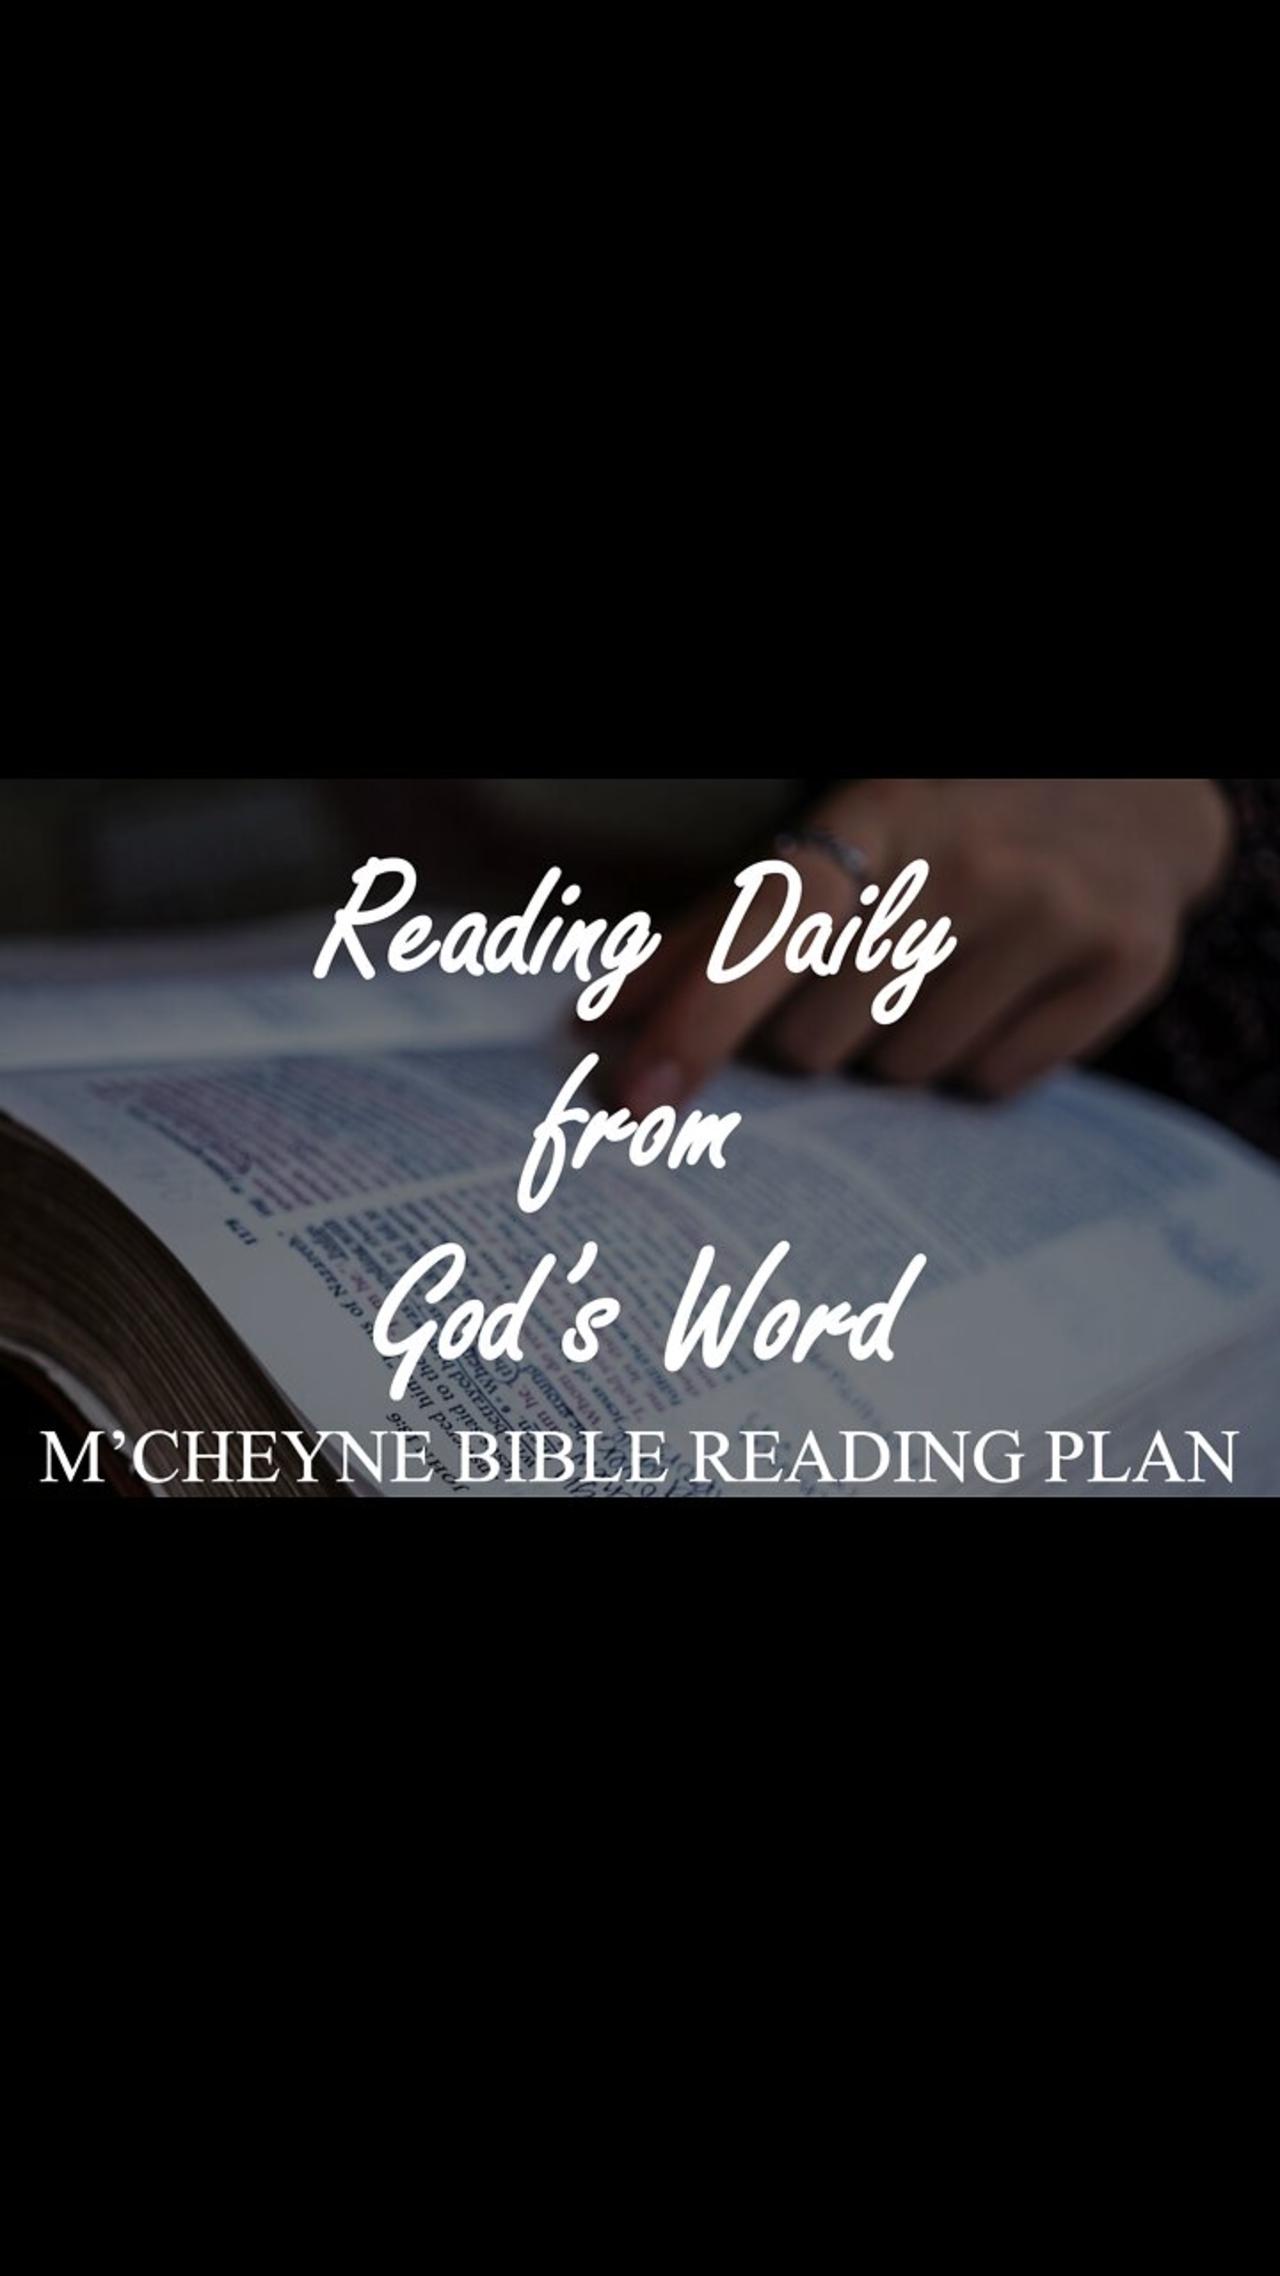 M’CHEYNE BIBLE READING PLAN - September 17